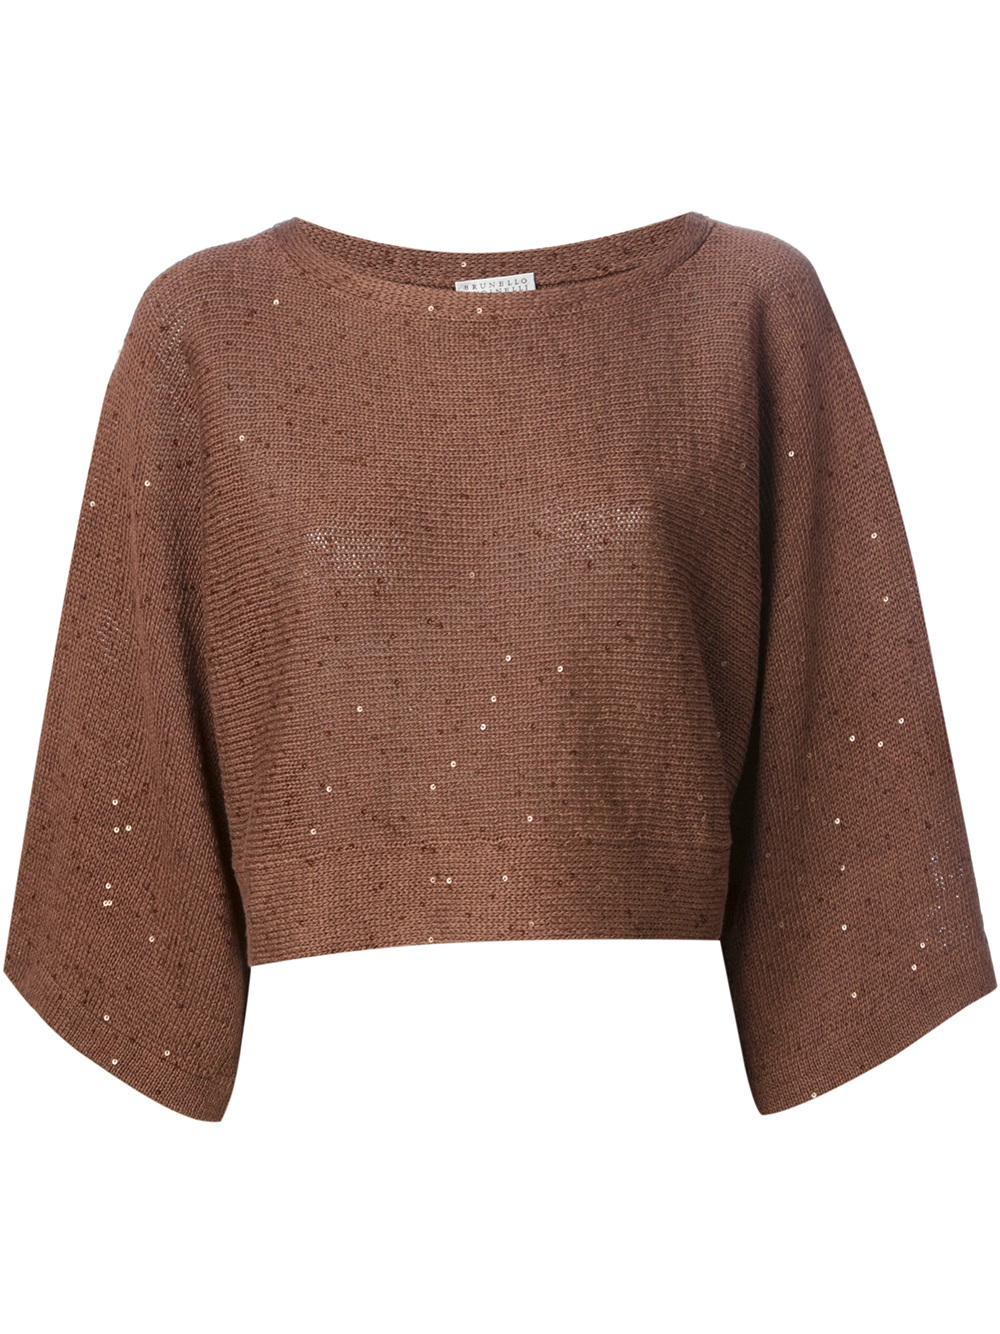 Brunello cucinelli Sequin Sweater in Brown | Lyst